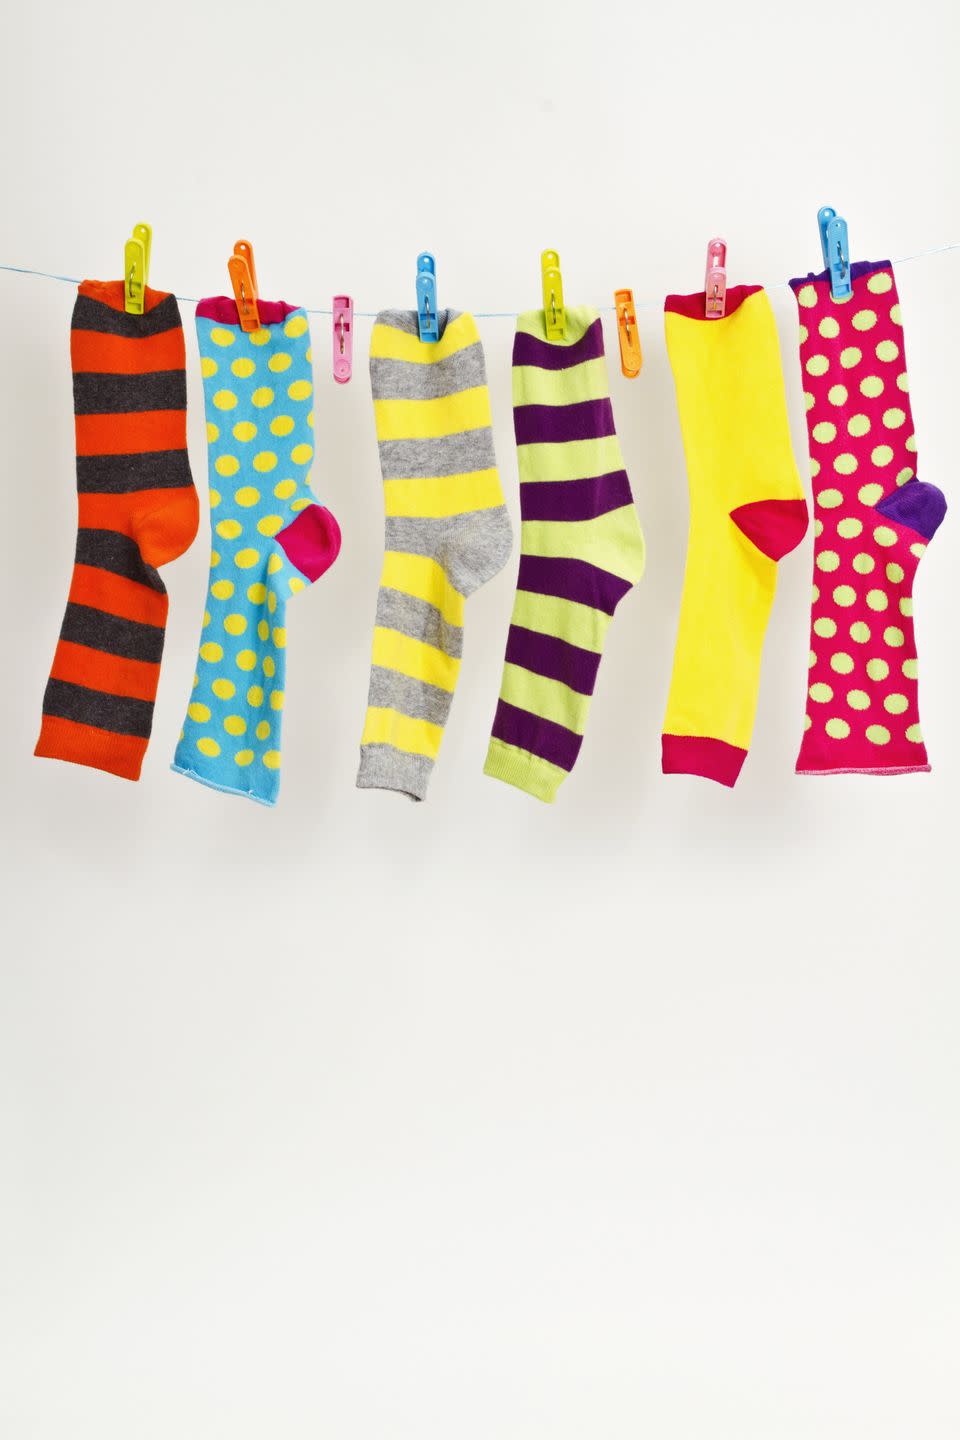 9) Orphan Socks